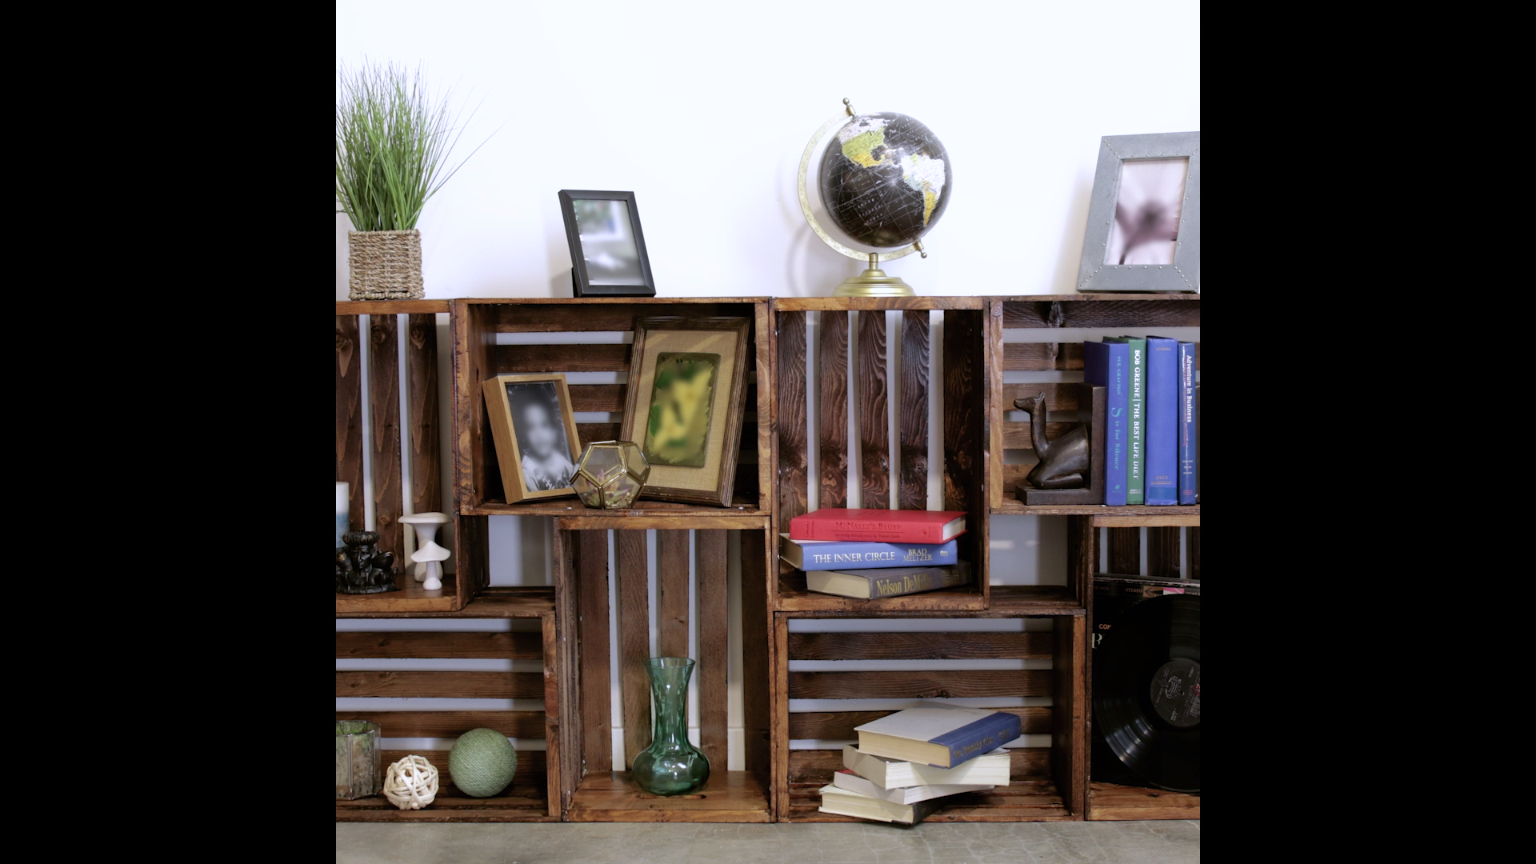 Repurpose Old Wooden Crates With This Clever Bookshelf DIY -   23 diy Bookshelf classroom ideas